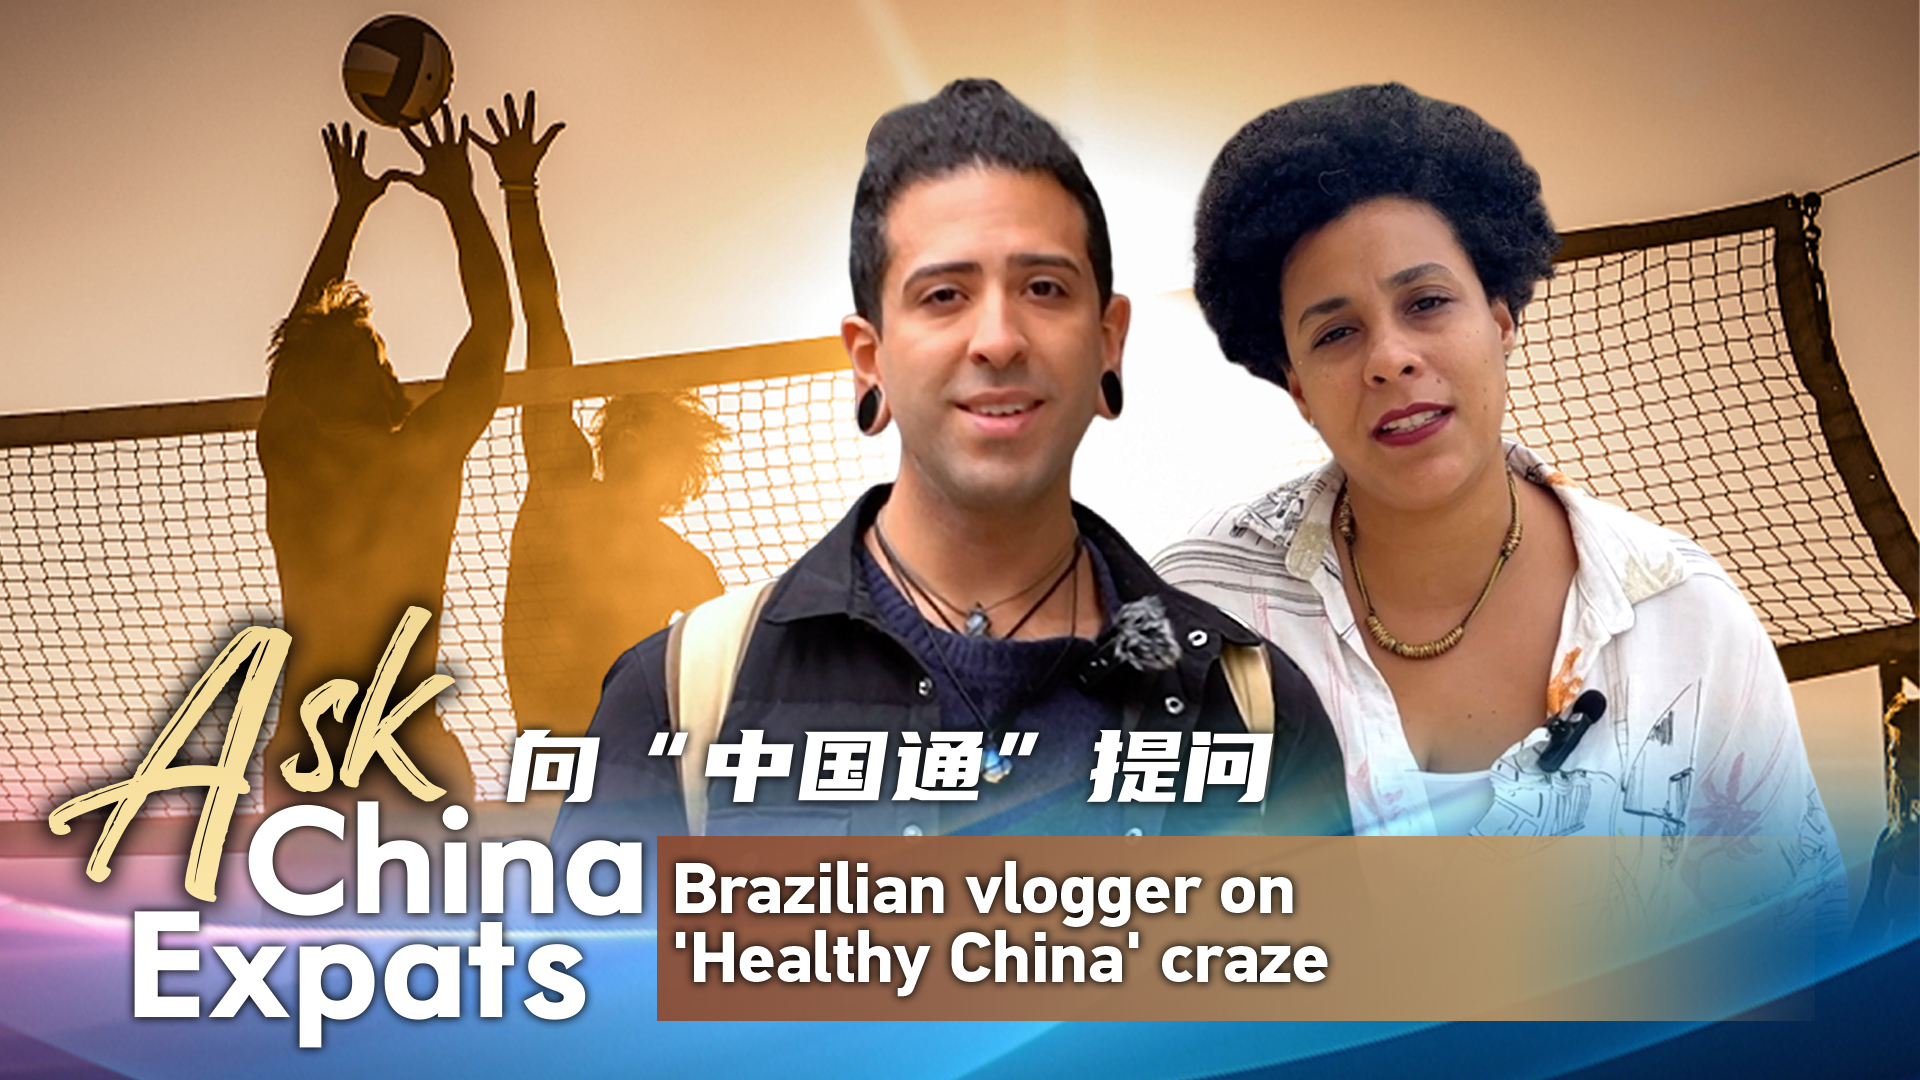 Ask China Expats: Brazilian vlogger on 'Healthy China' craze